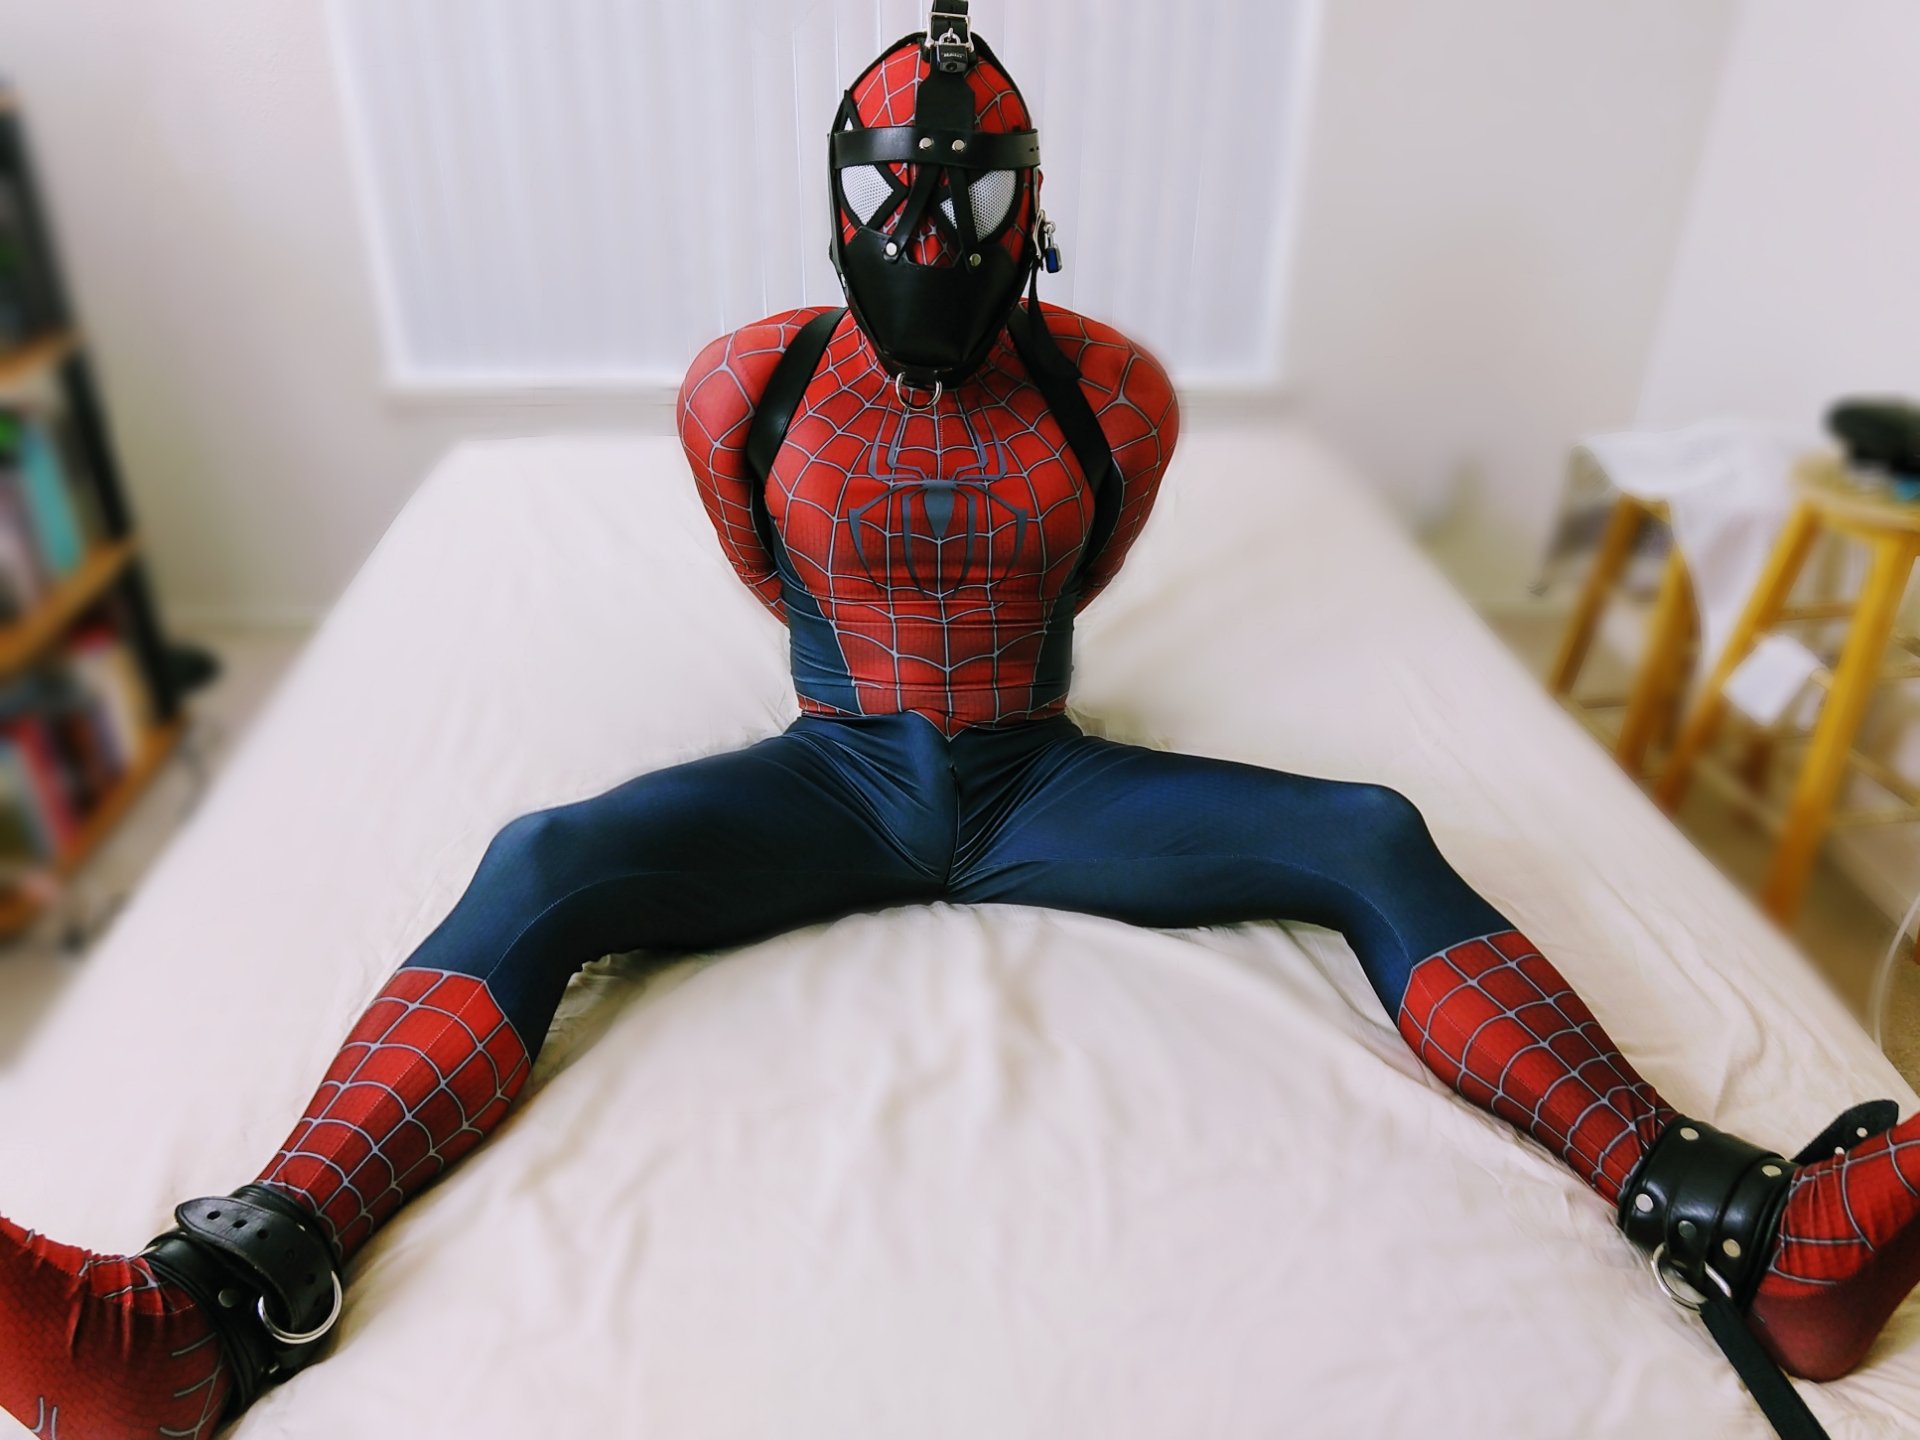 Legs spread, Spiderman 